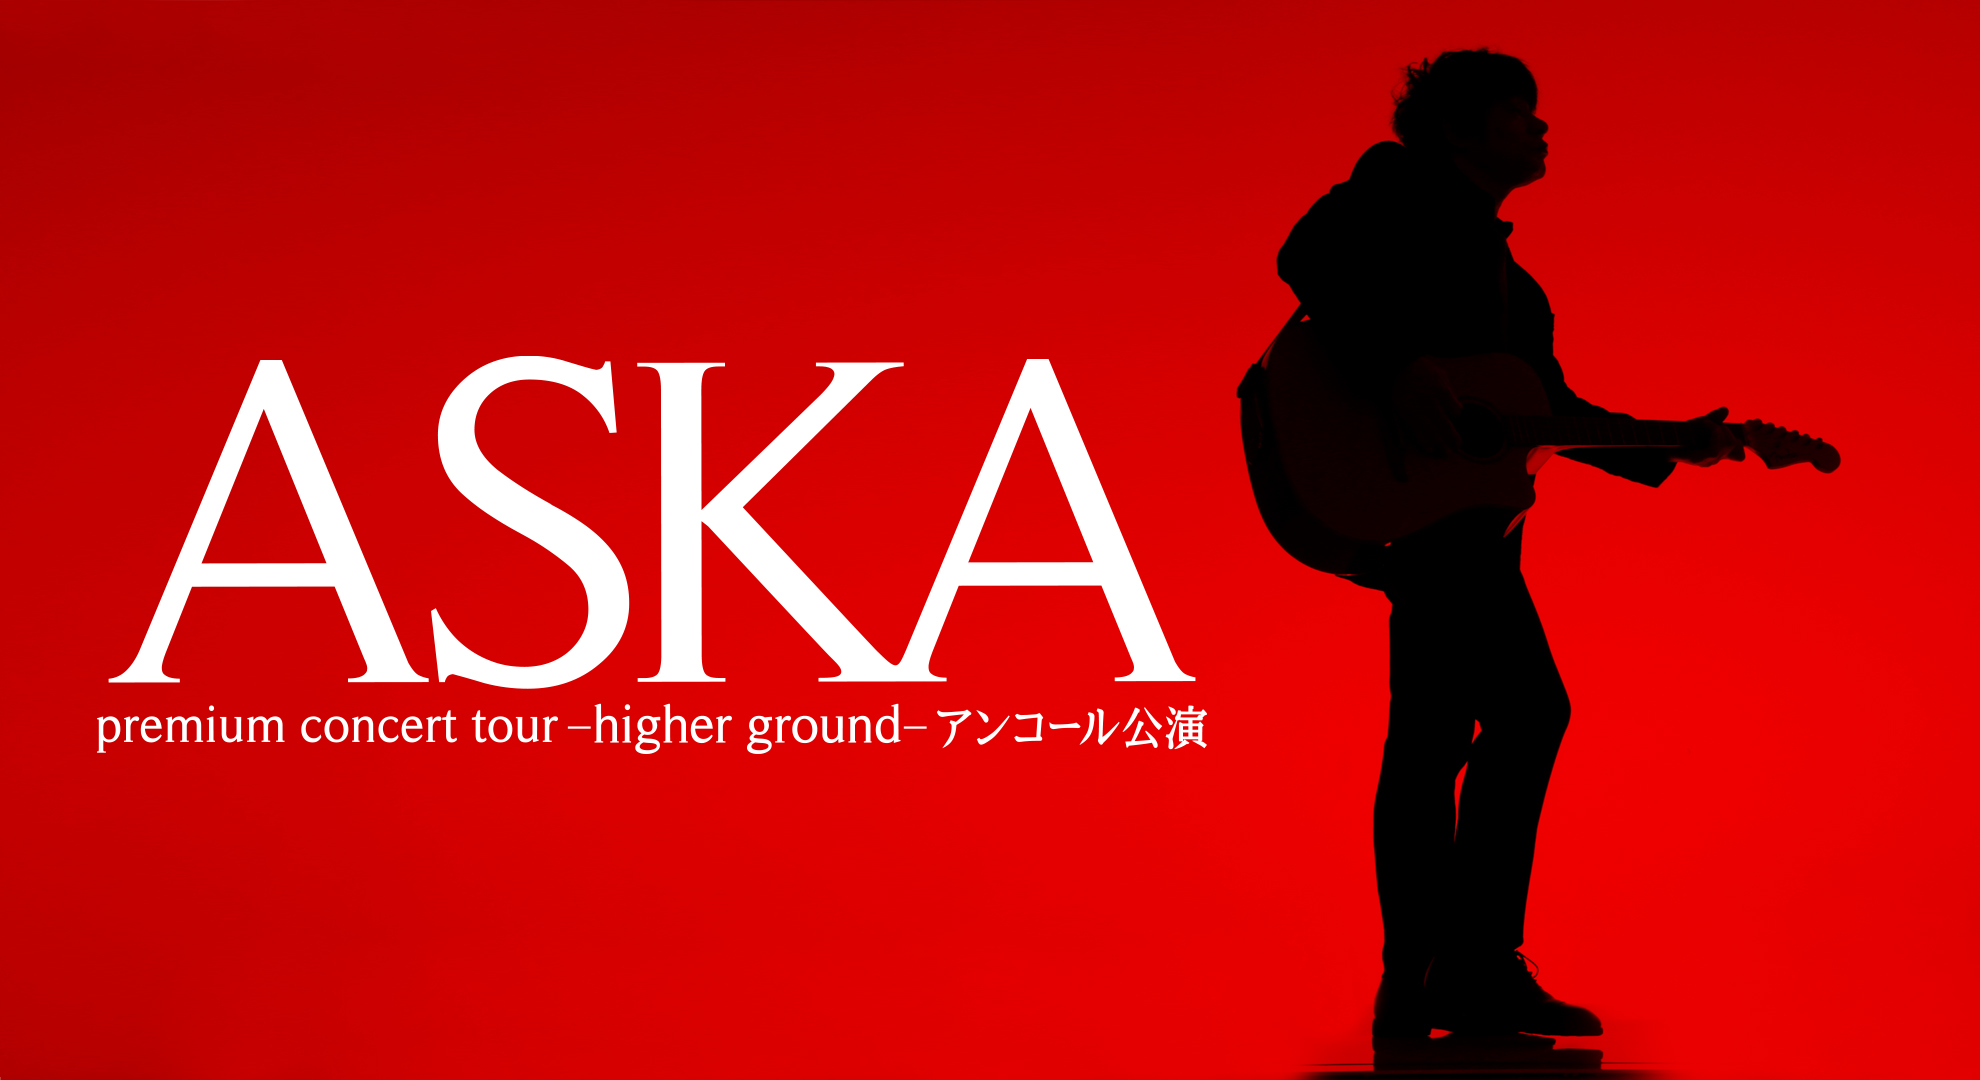 ASKA premium concert tour -higher ground- アンコール公演